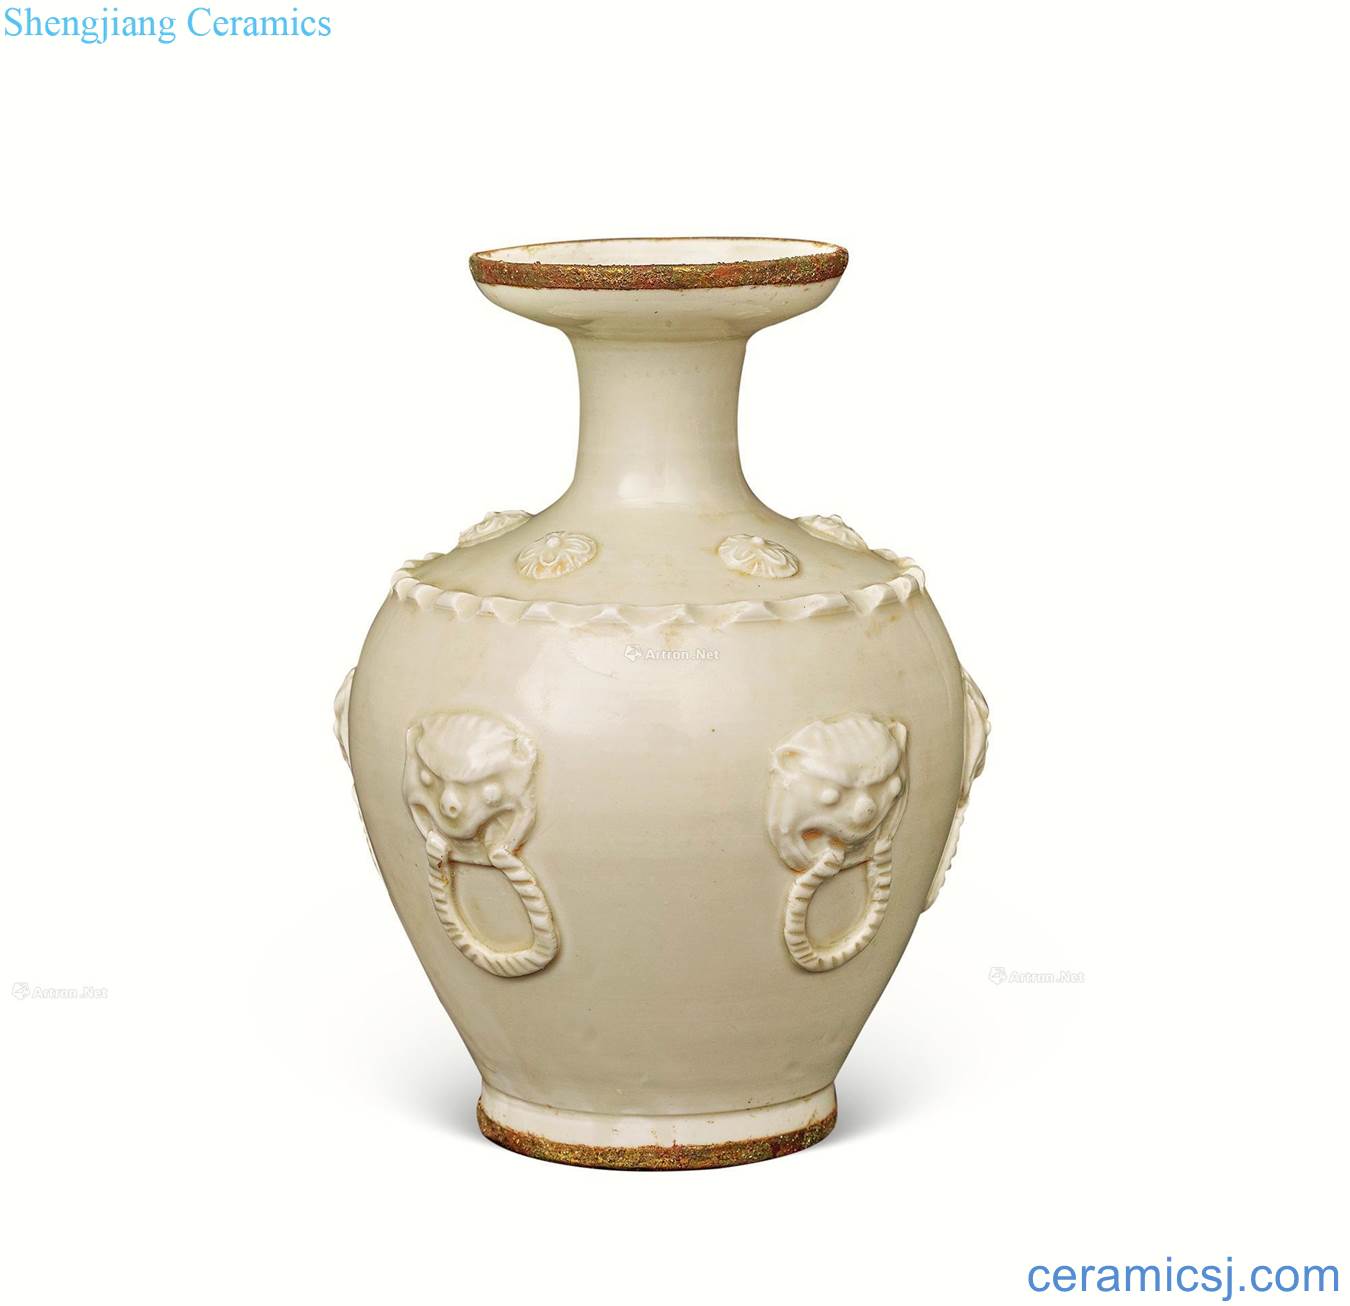 The song dynasty kiln vase